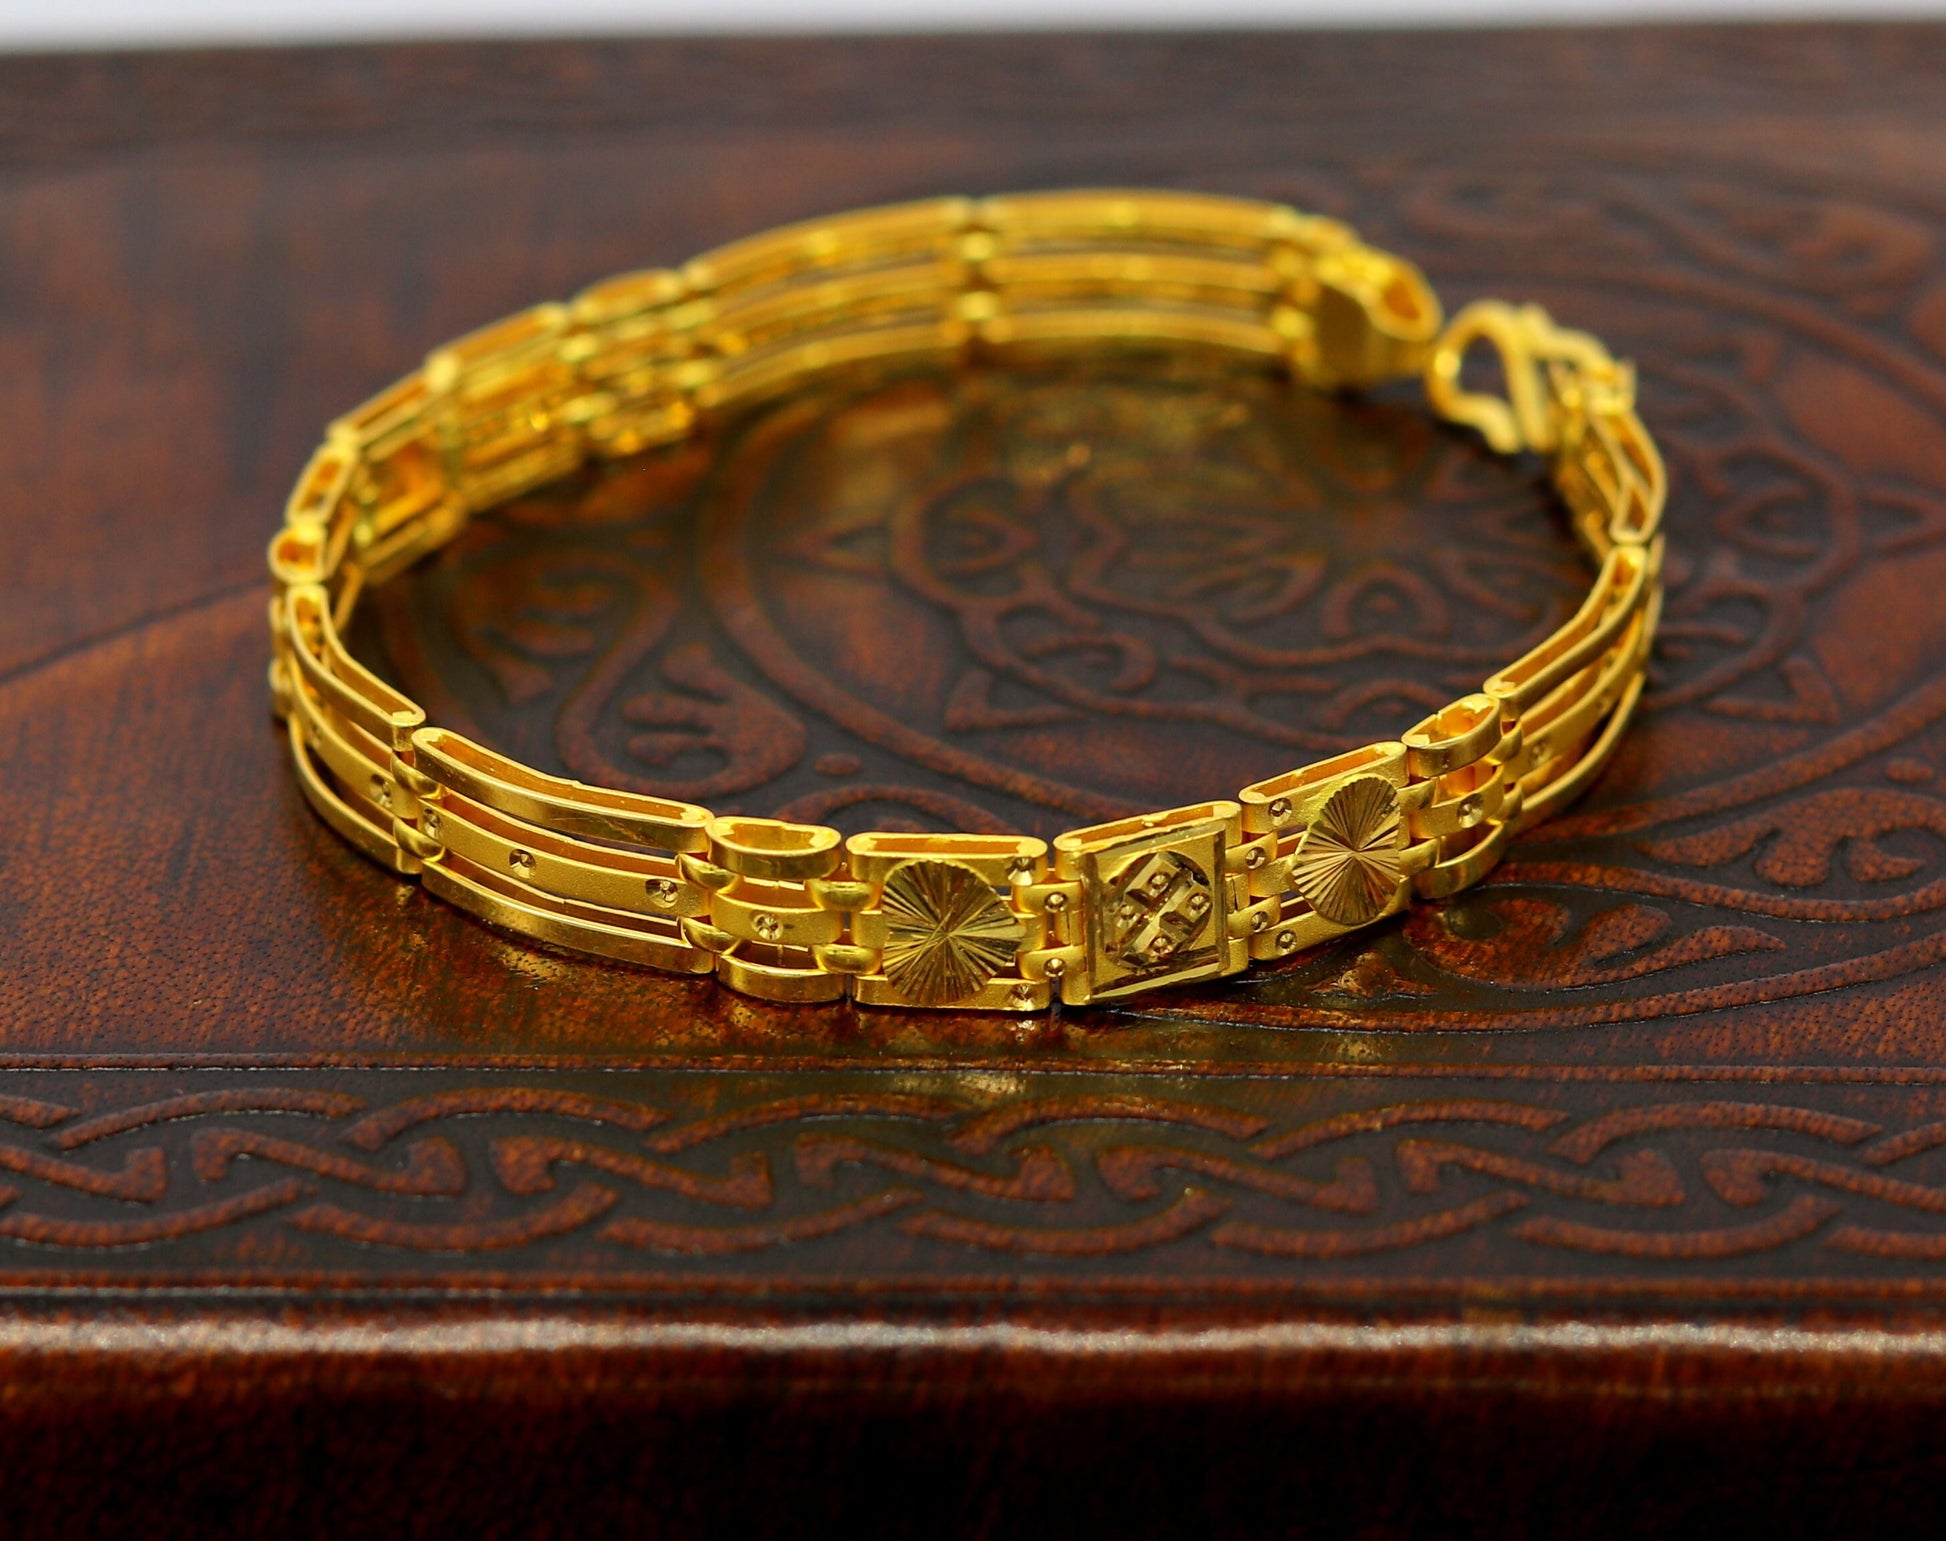 Amazing 22kt yellow gold handcrafted gorgeous design diamond cut designer  flexible bracelet unique new stylish unisex bracelet jewelry gbr33